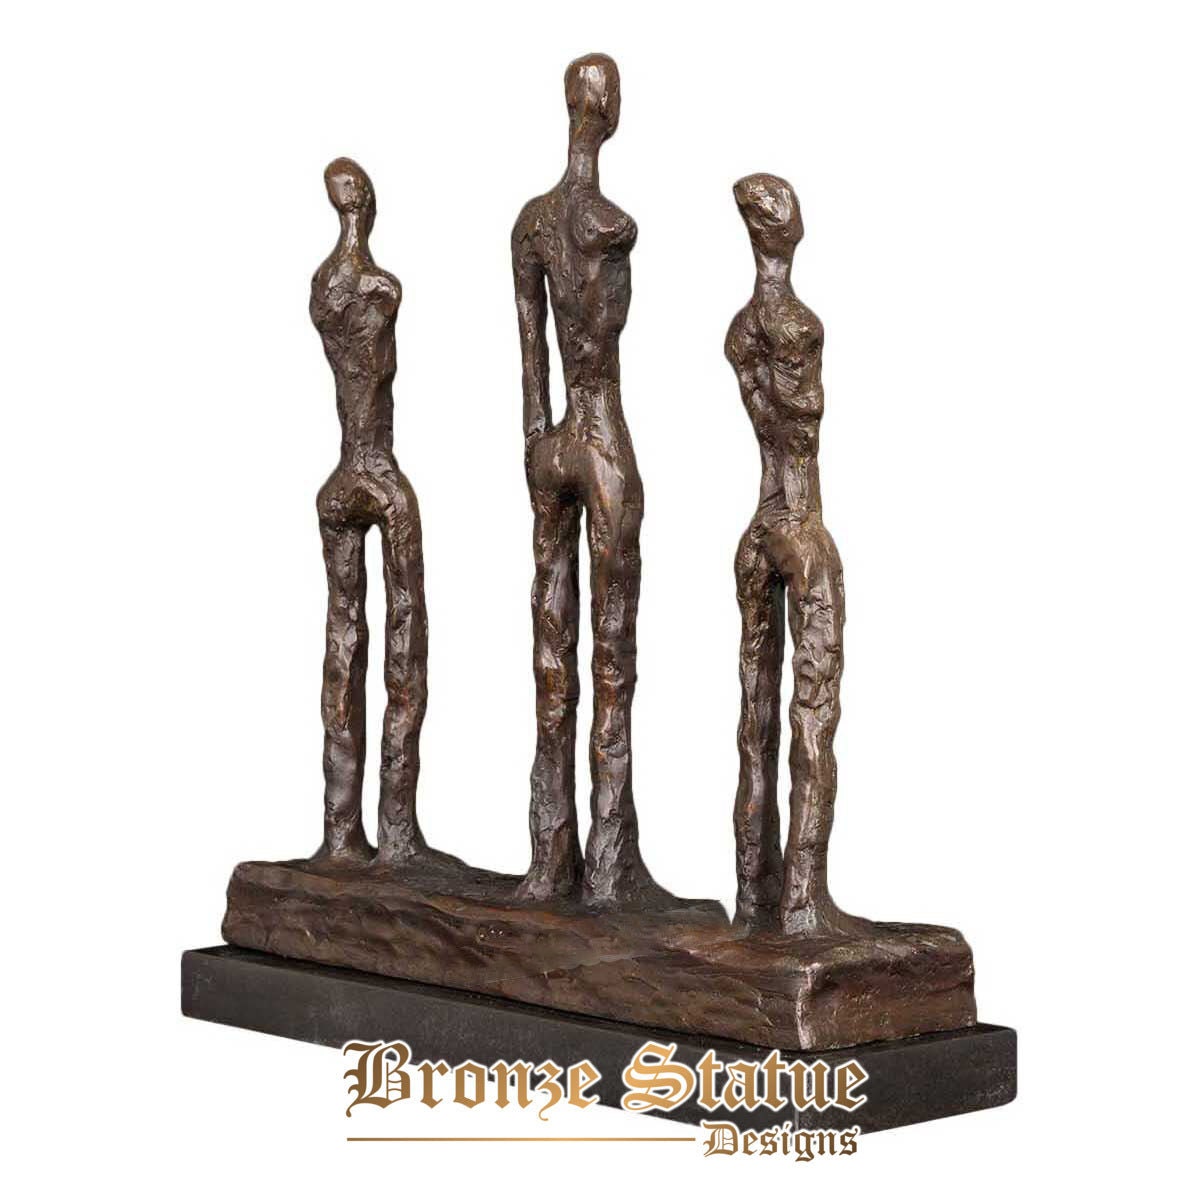 Bronze famous statue giacometti sculpture art replica collectible figurine home indoor decor gifts